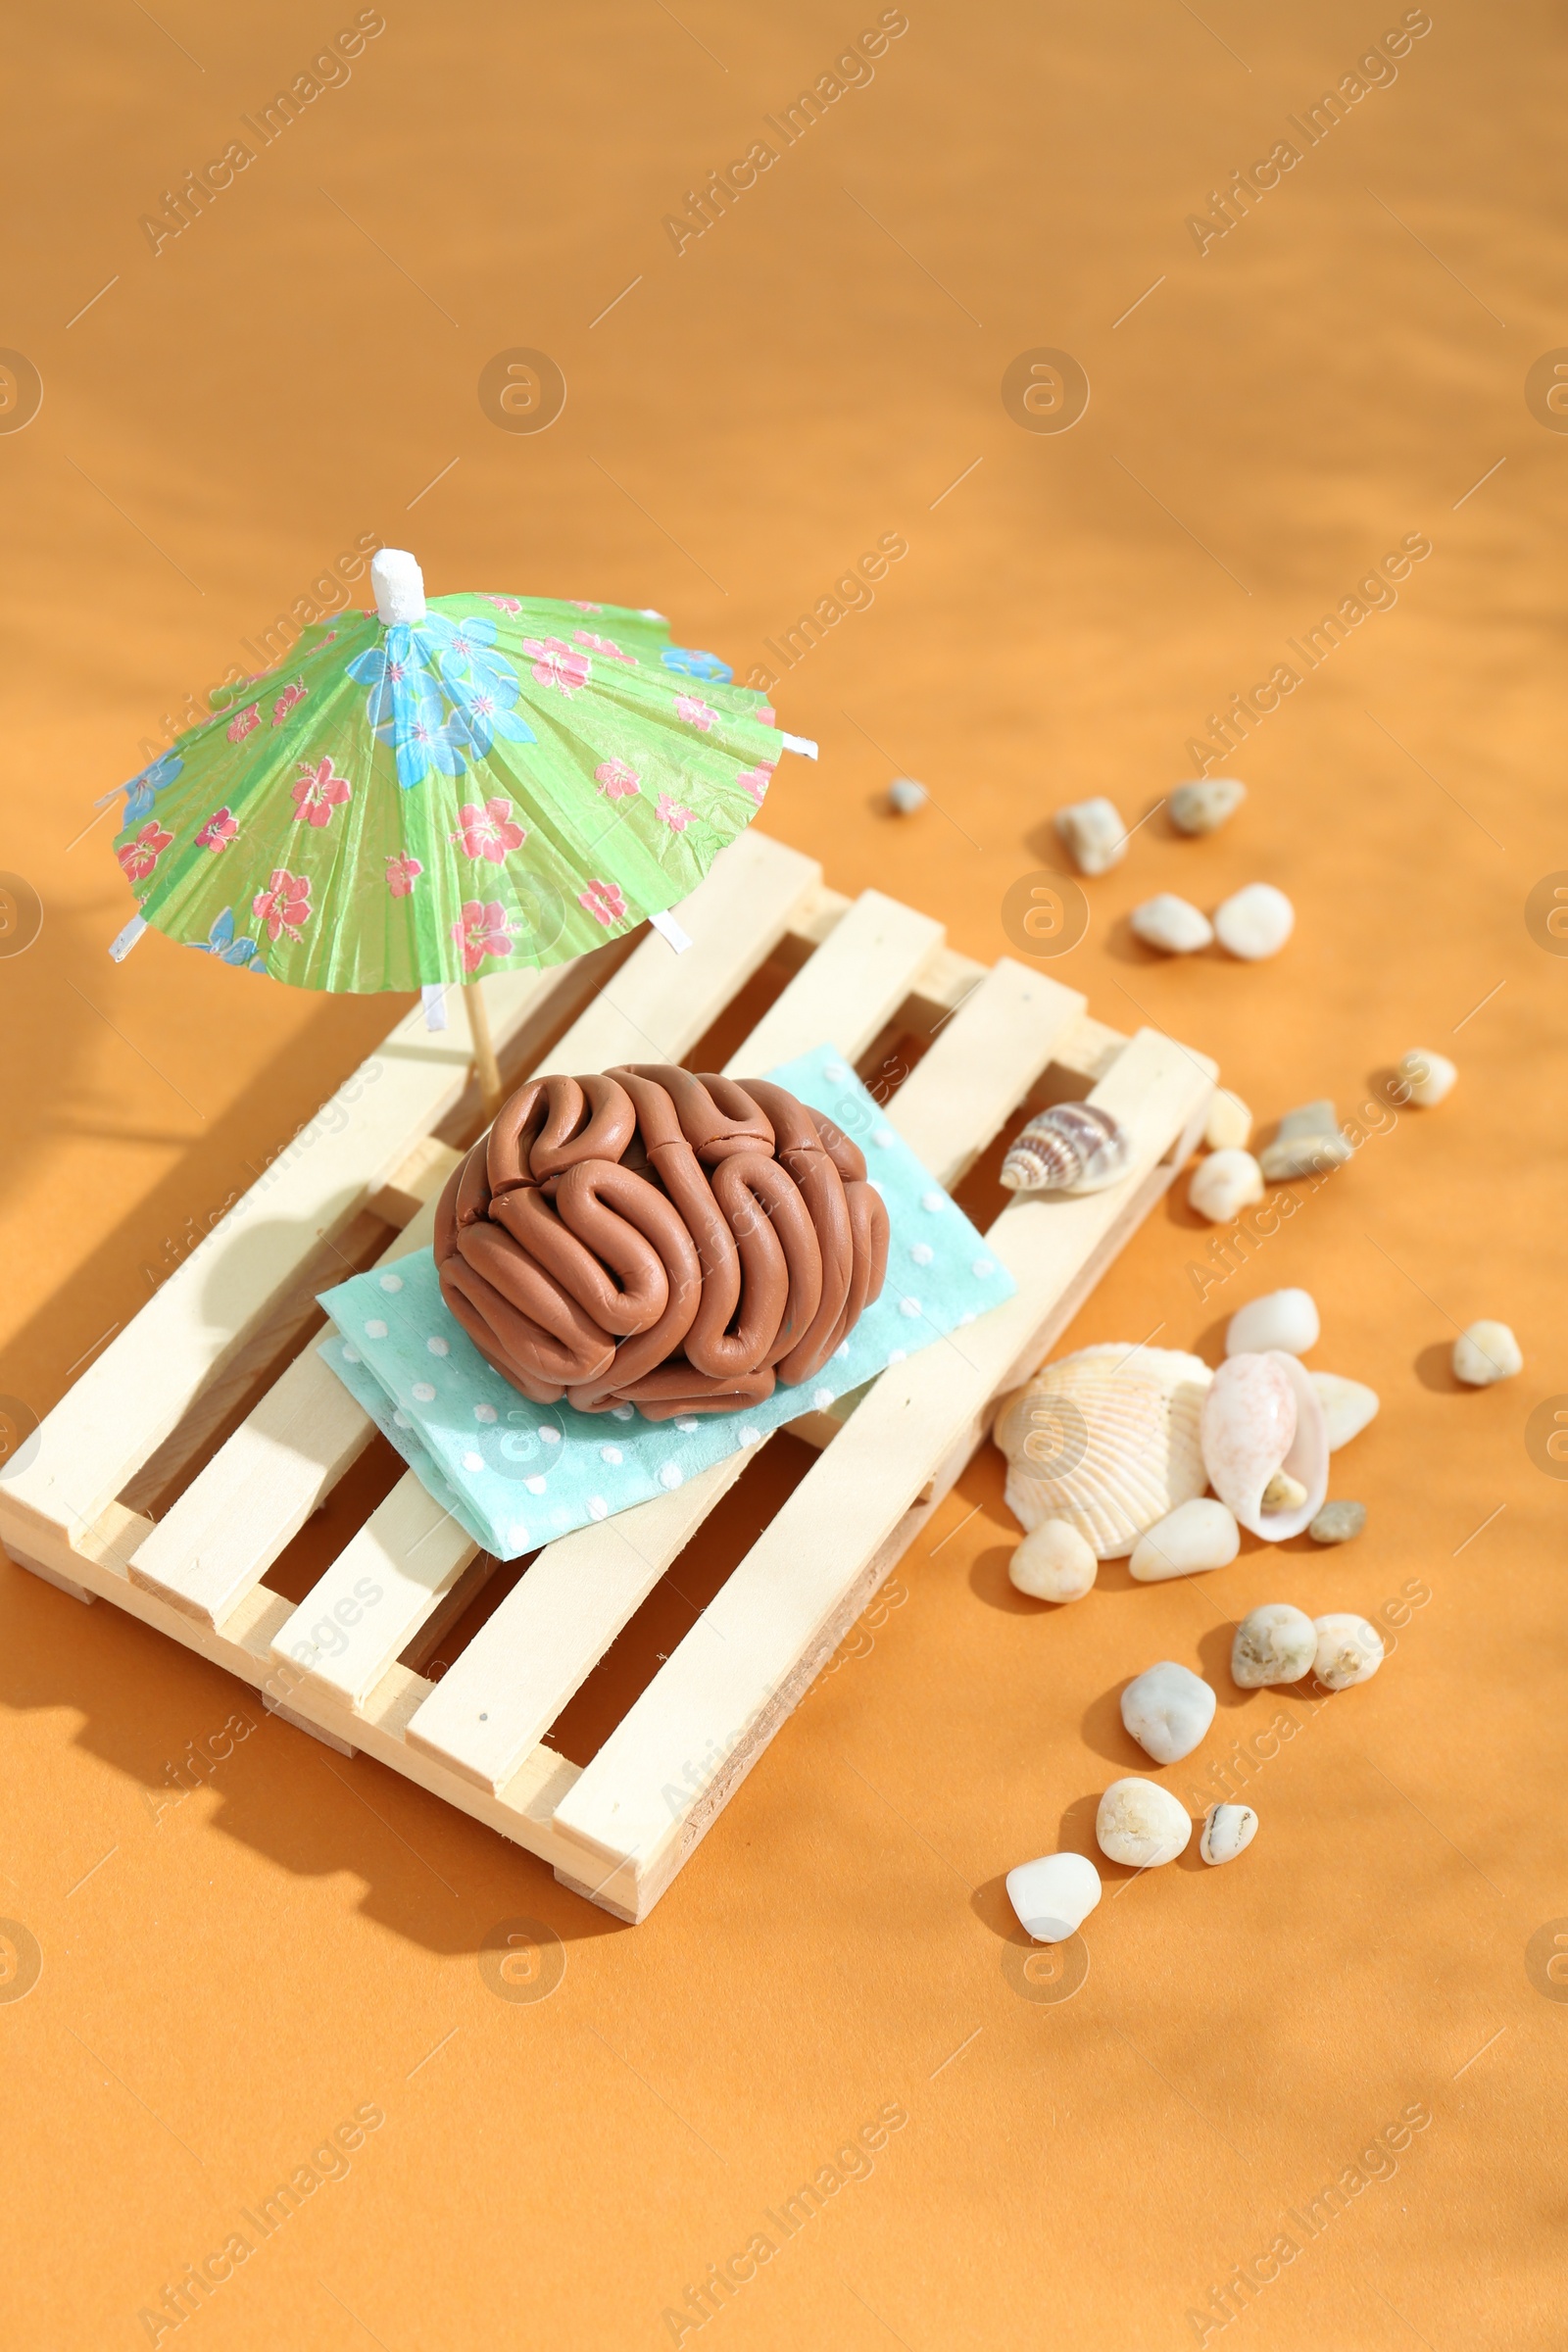 Photo of Brain made of plasticine on mini wooden sunbed under umbrella against orange background